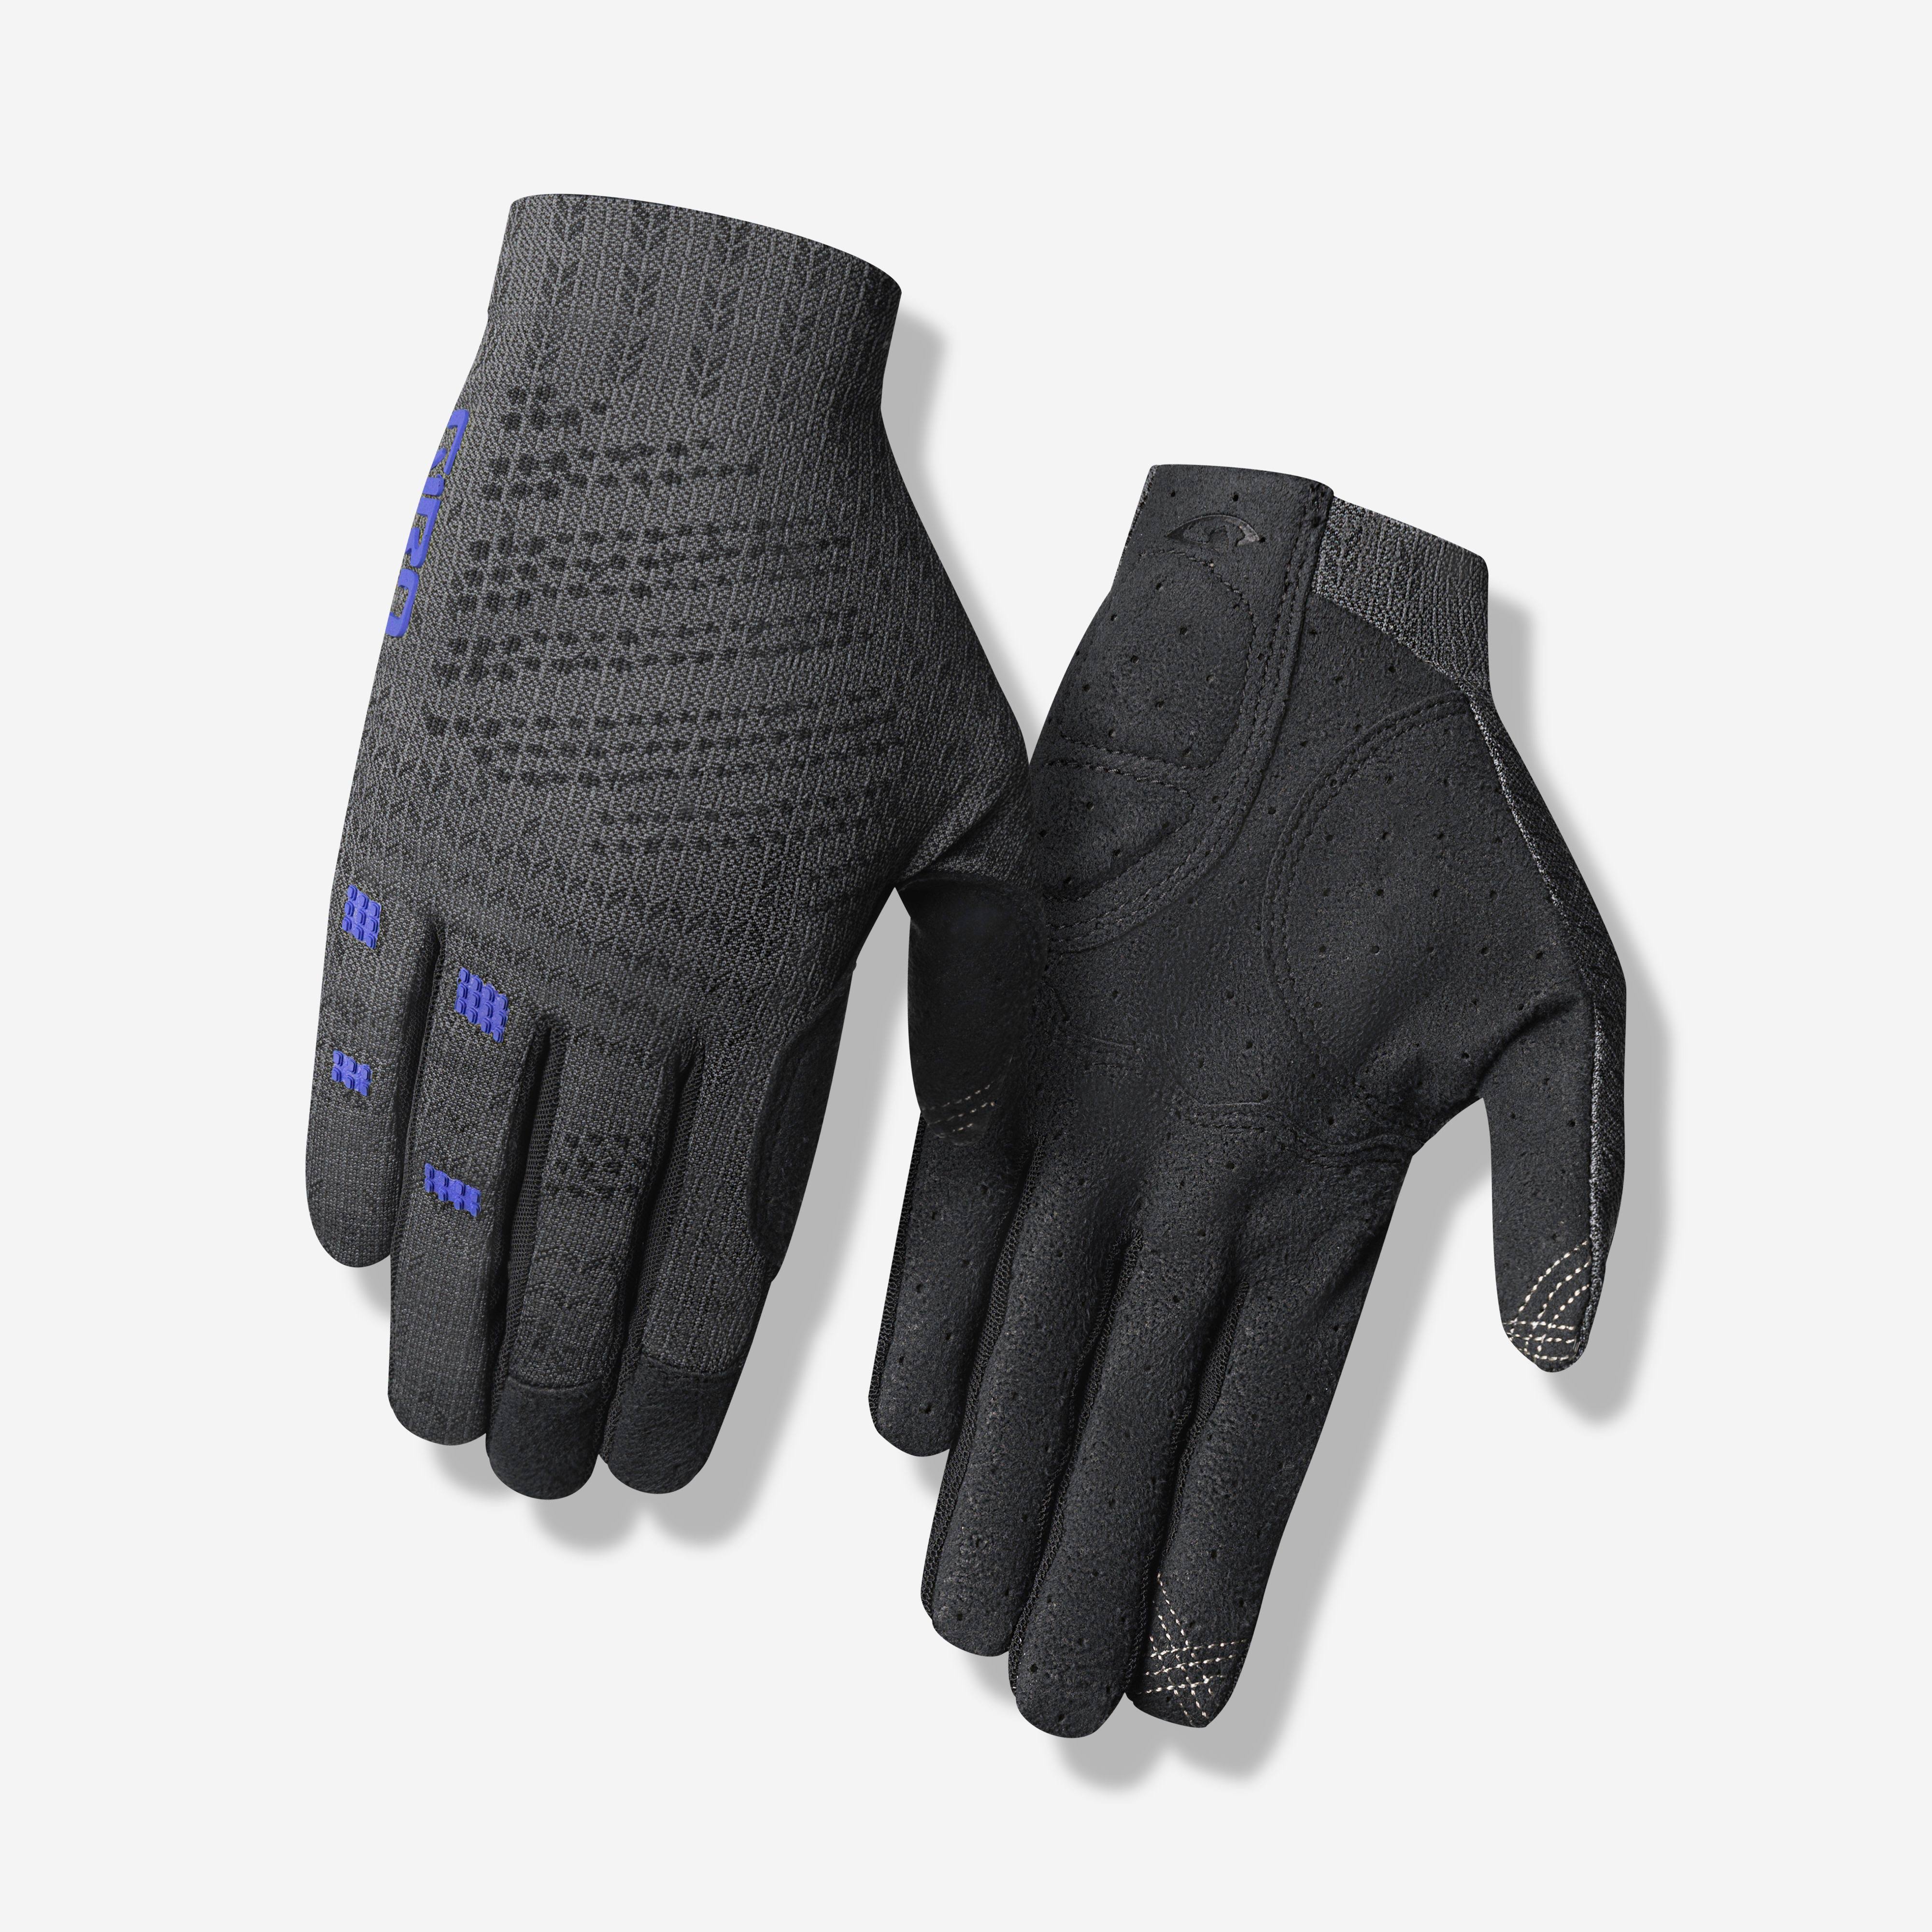 Giro Women's Xnetic Trail Glove - Large - Titanium/Electric Purple